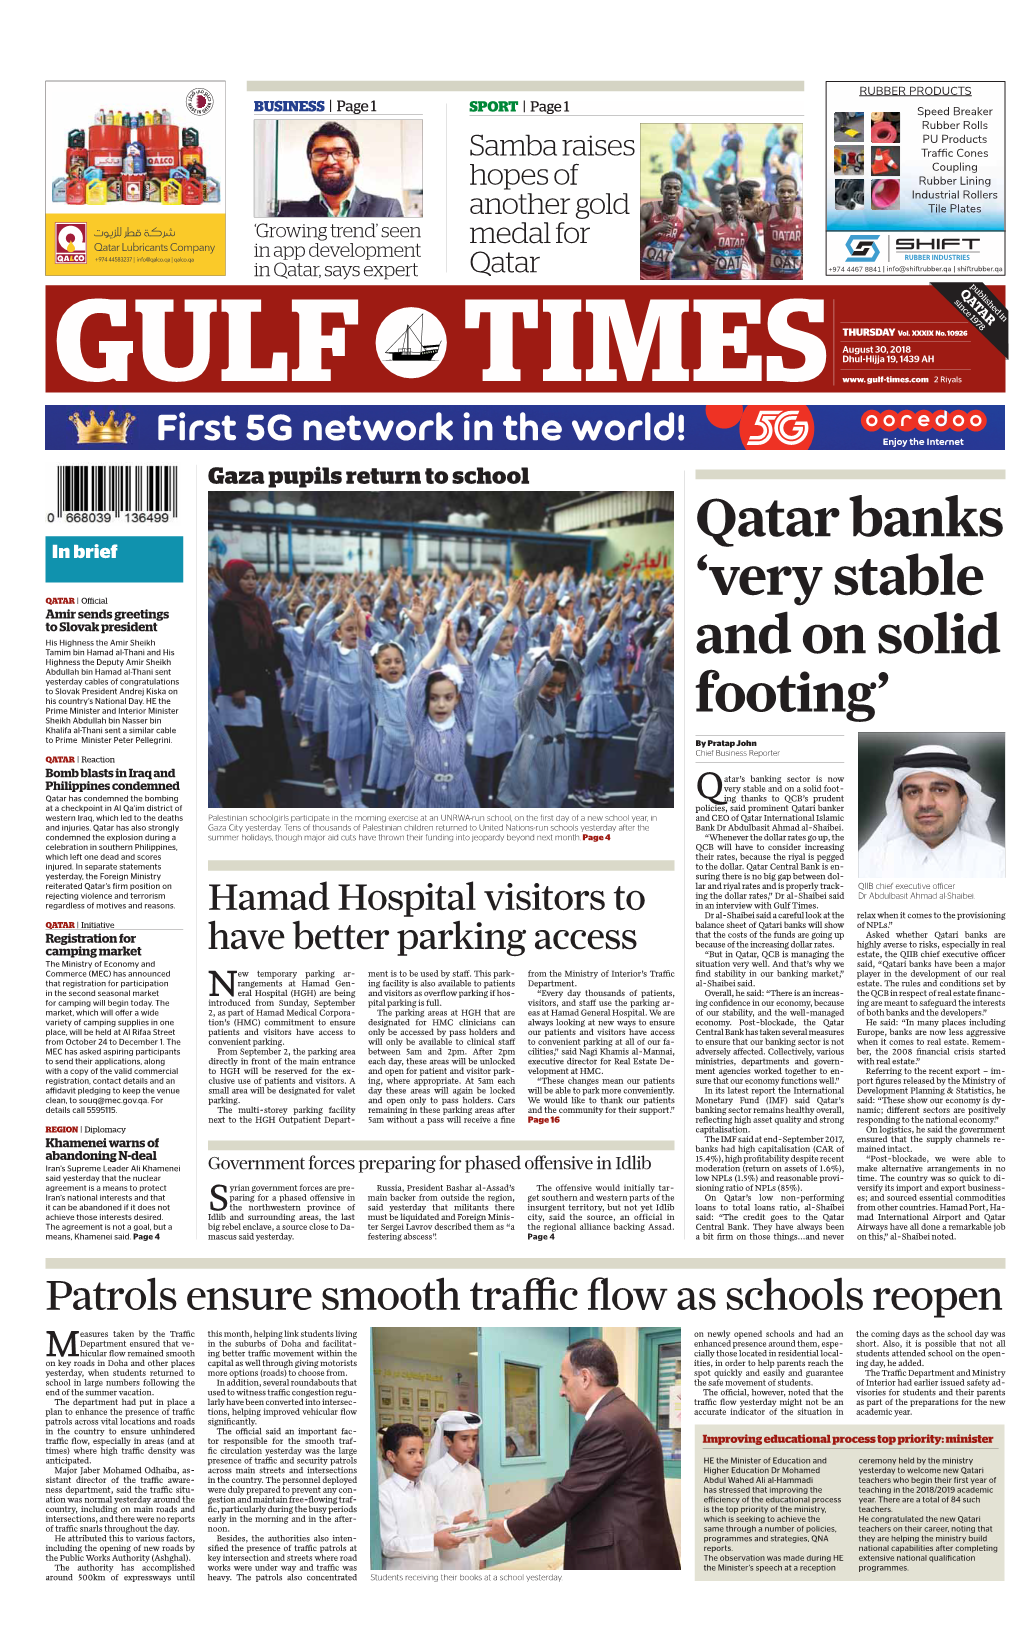 Qatar Banks in Brief